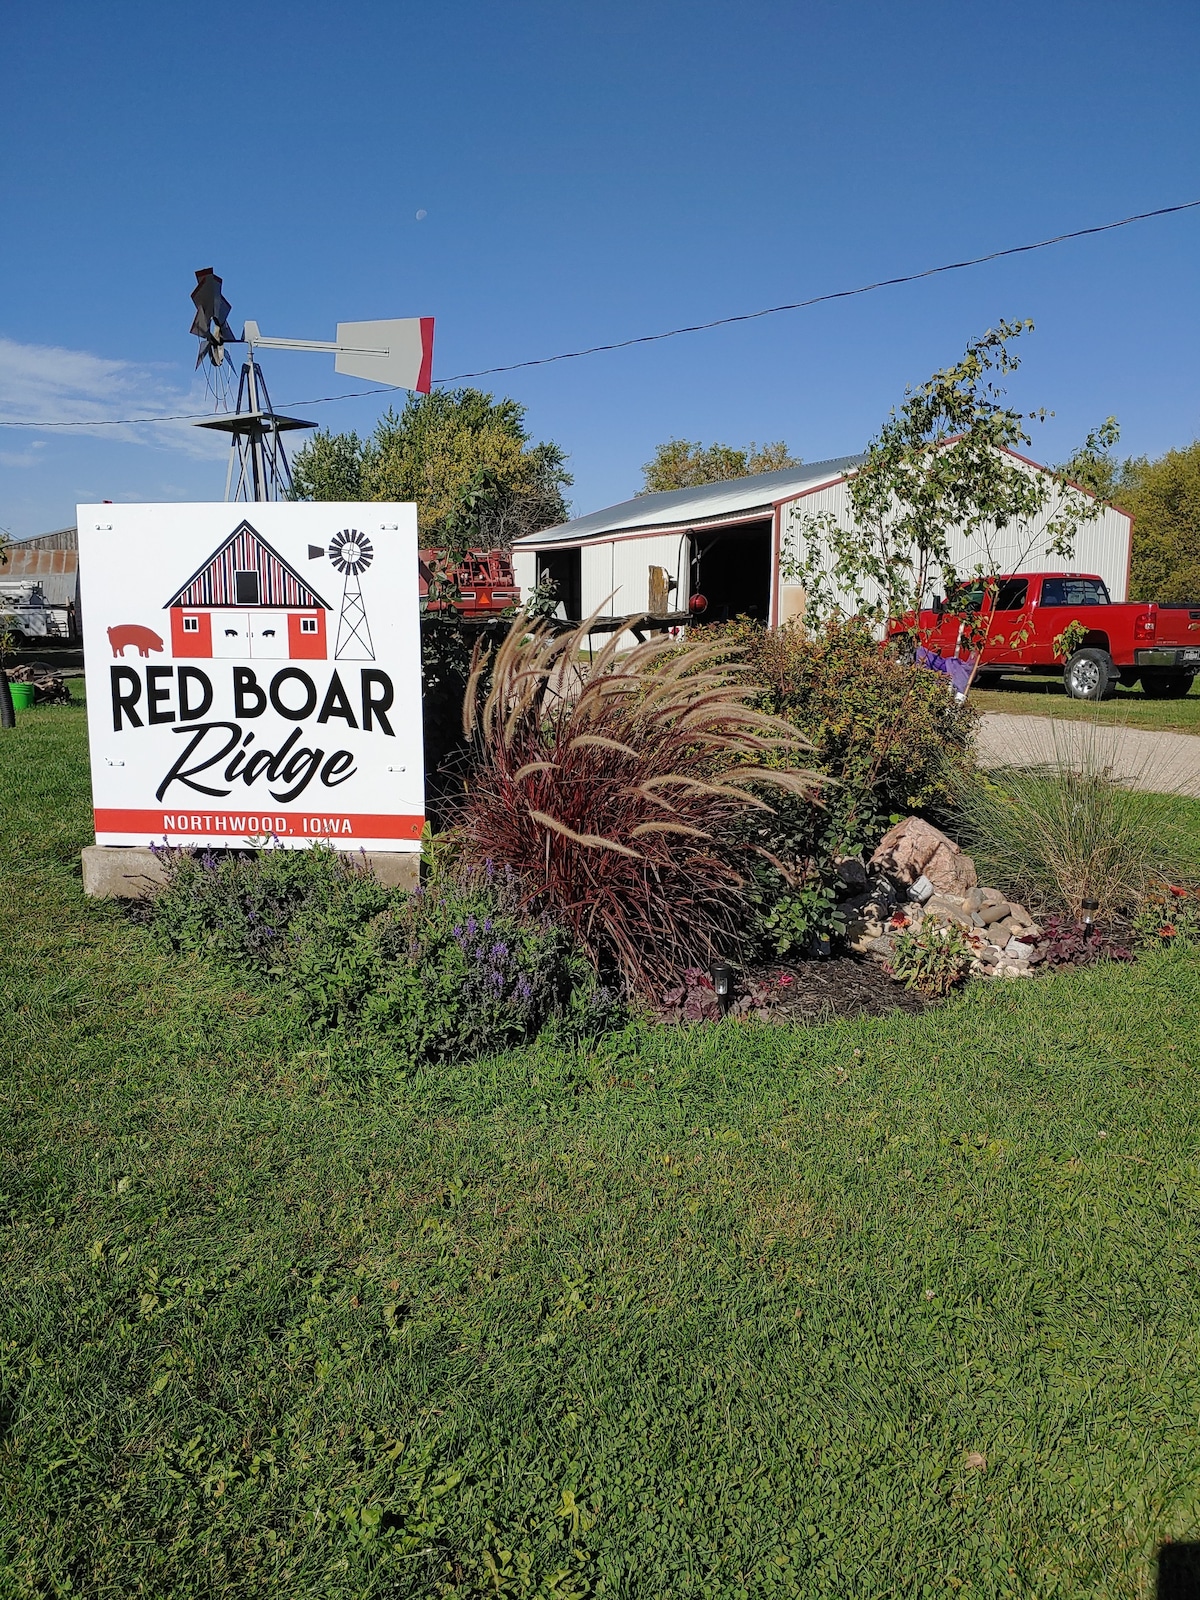 "Red Boar Ridge". RBR # 1